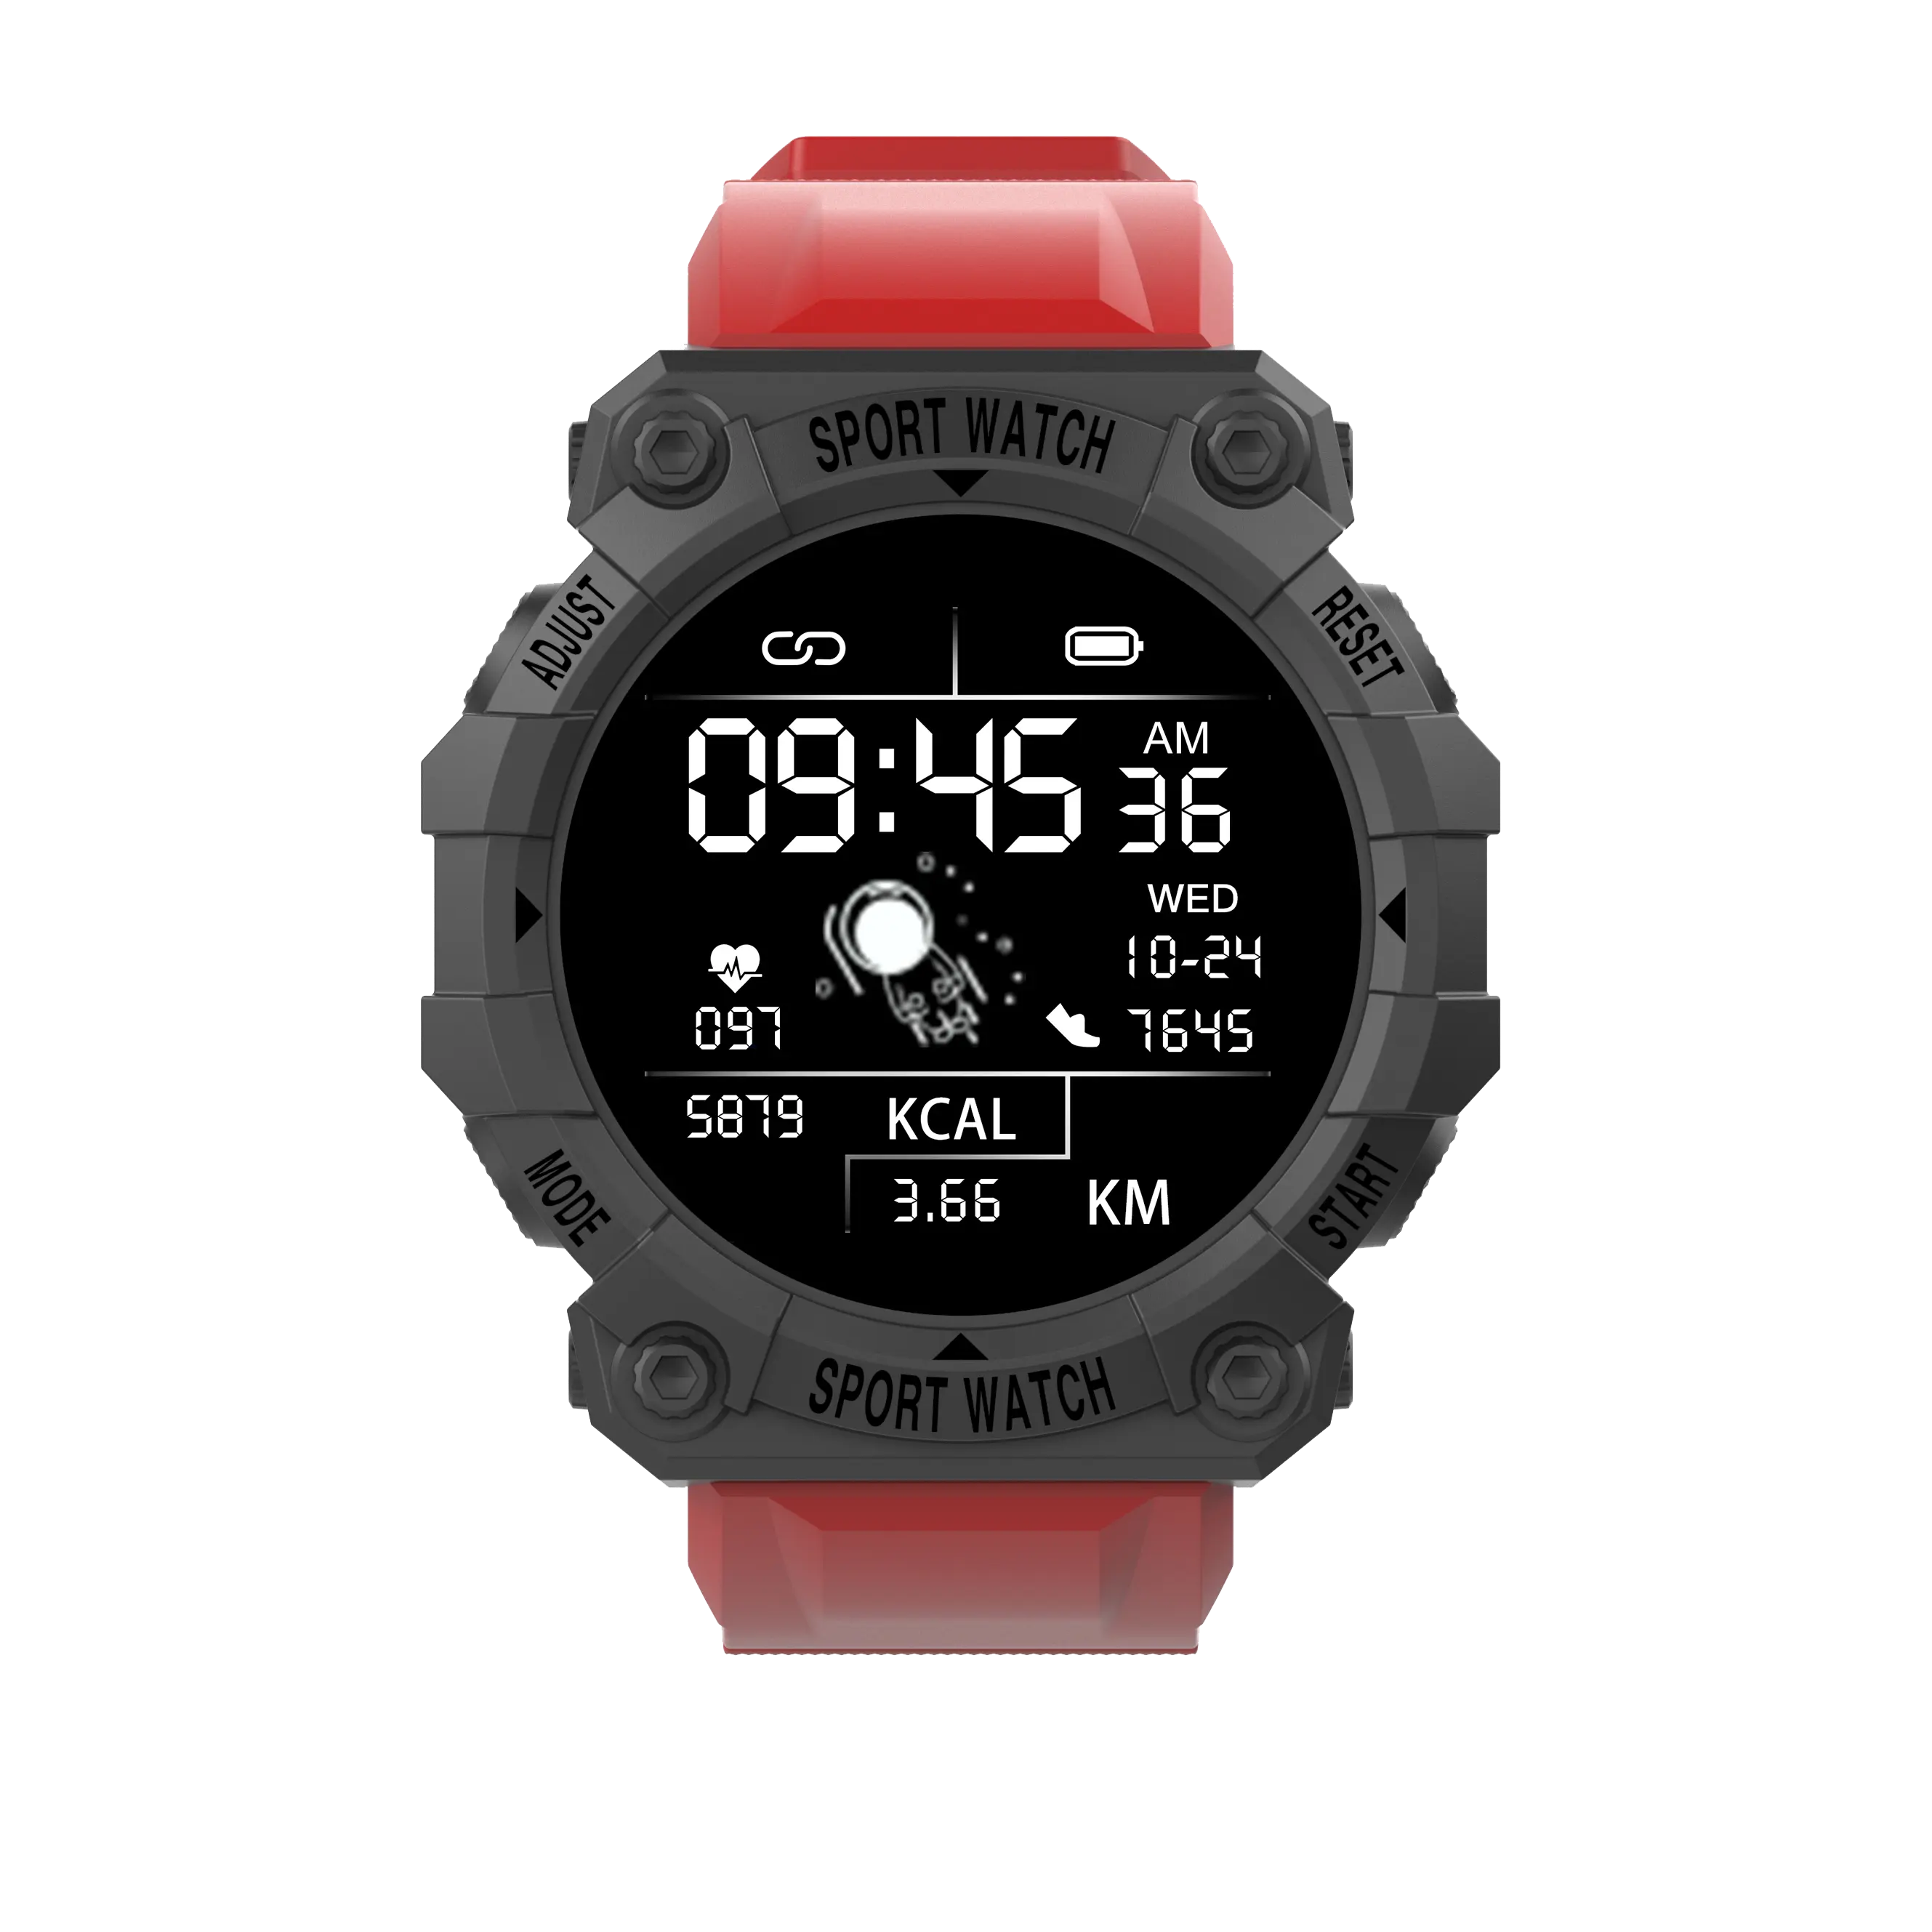 2021 New Arrivals FD68s Digital Watch Heart Rate Monitoring Fitness Clock Smartwatch For Phone IP67 Waterproof Smart Watch FD68